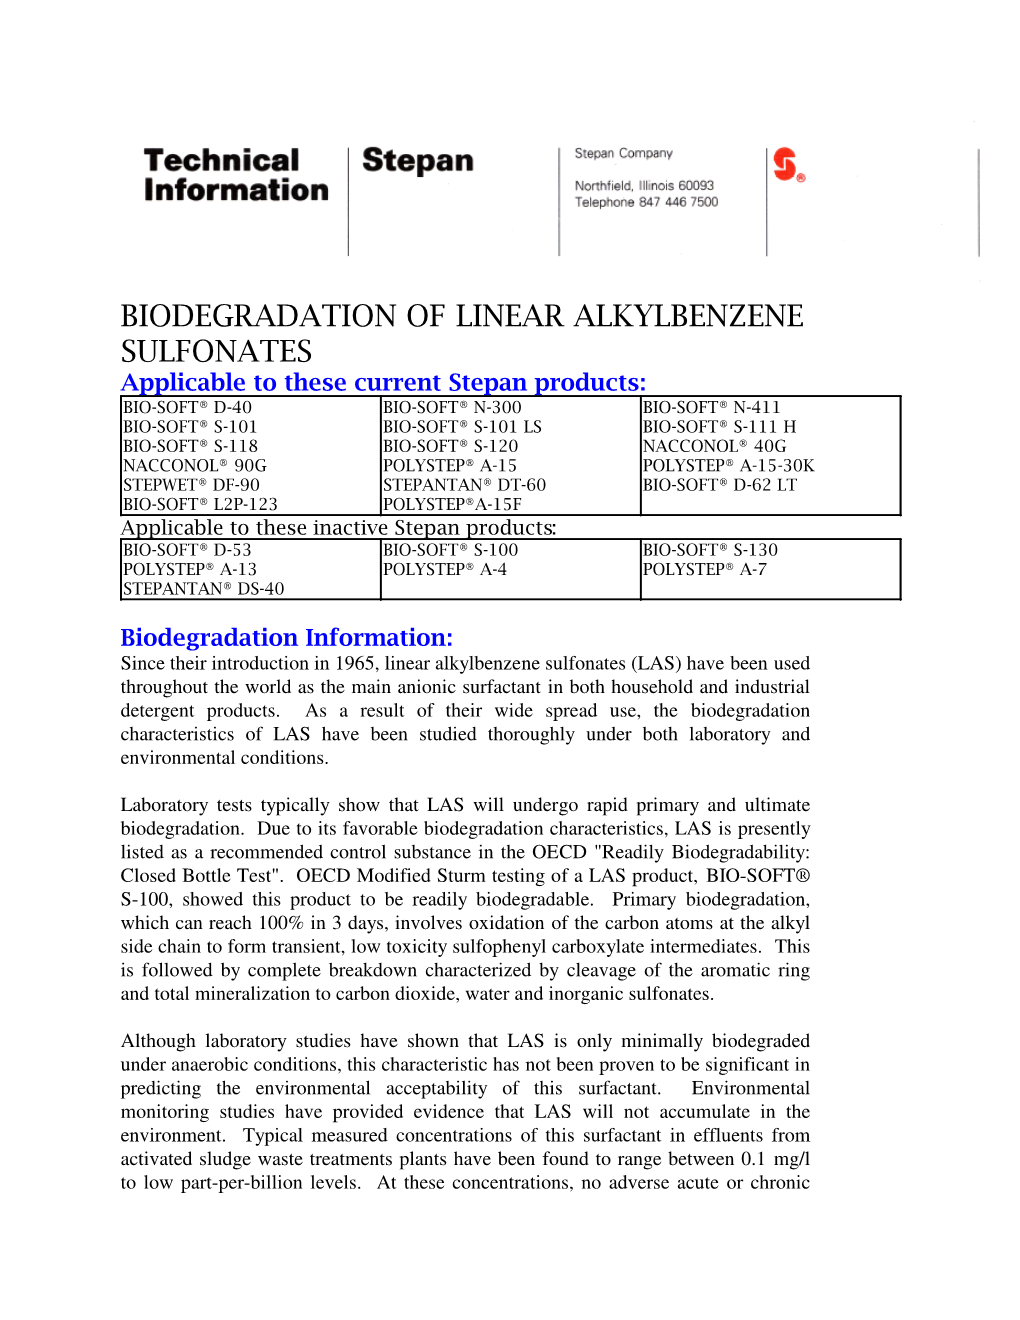 Biodegradation of Linear Alkylbenzene Sulfonates